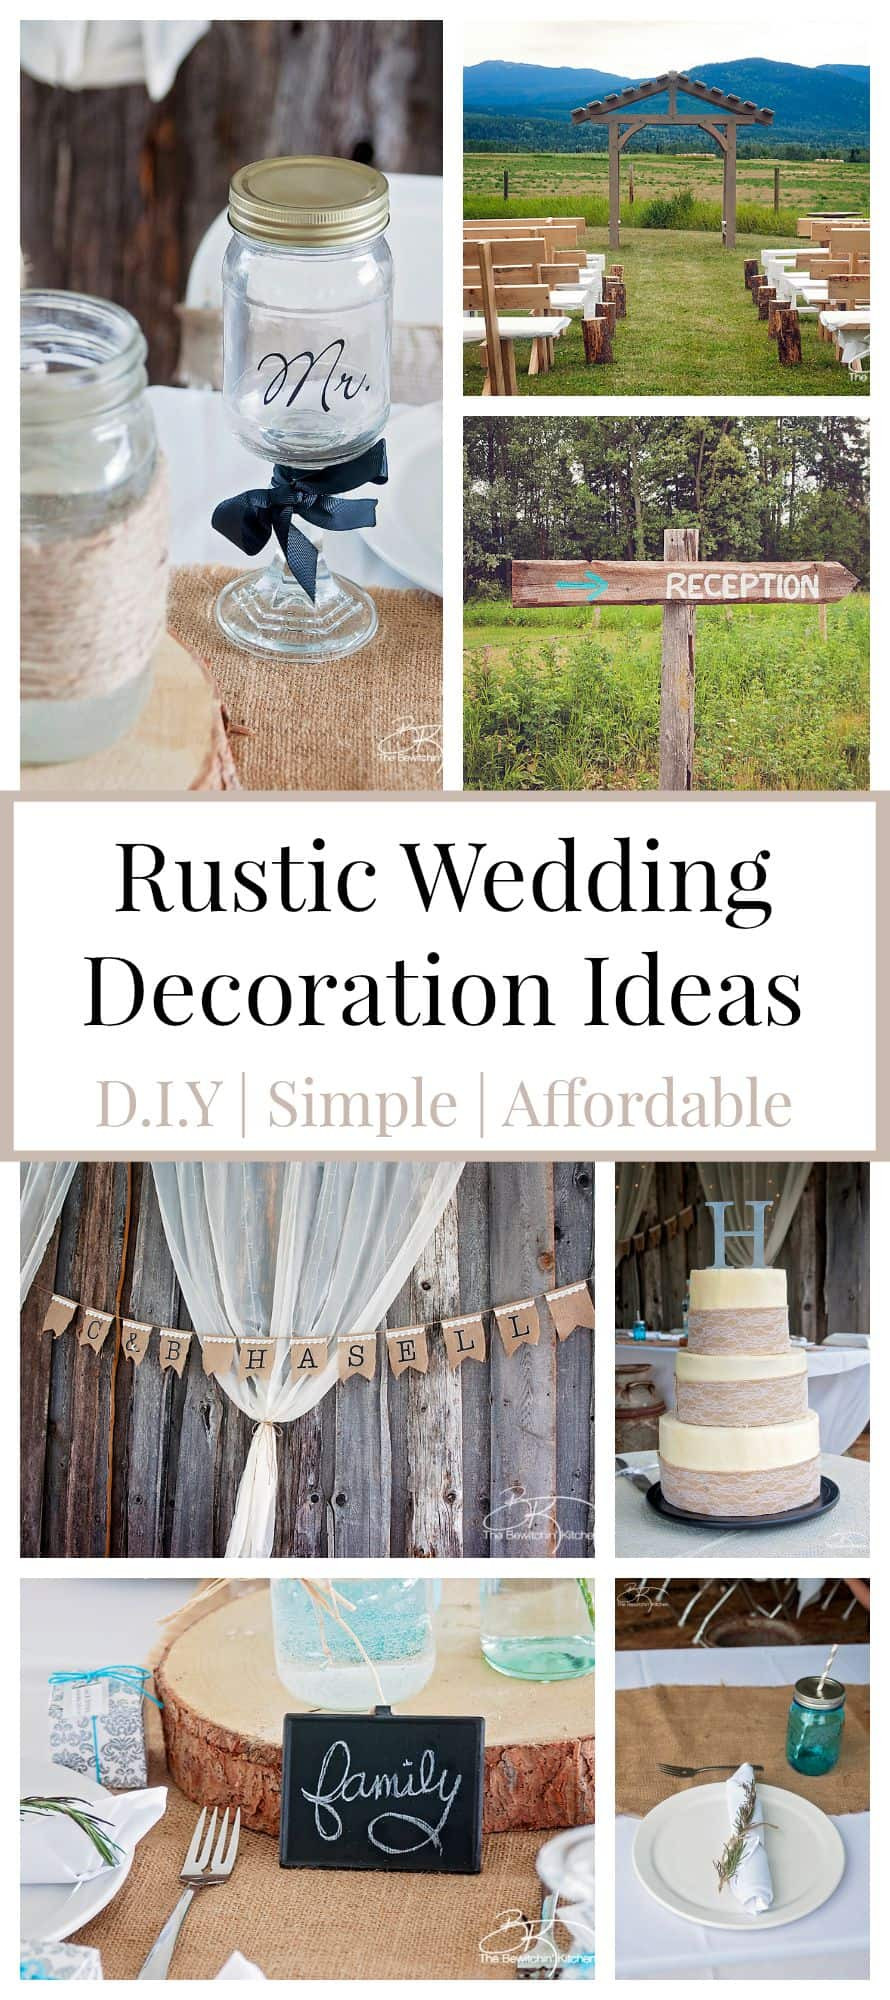 DIY Rustic Wedding Favors
 Rustic Wedding Ideas That Are DIY & Affordable